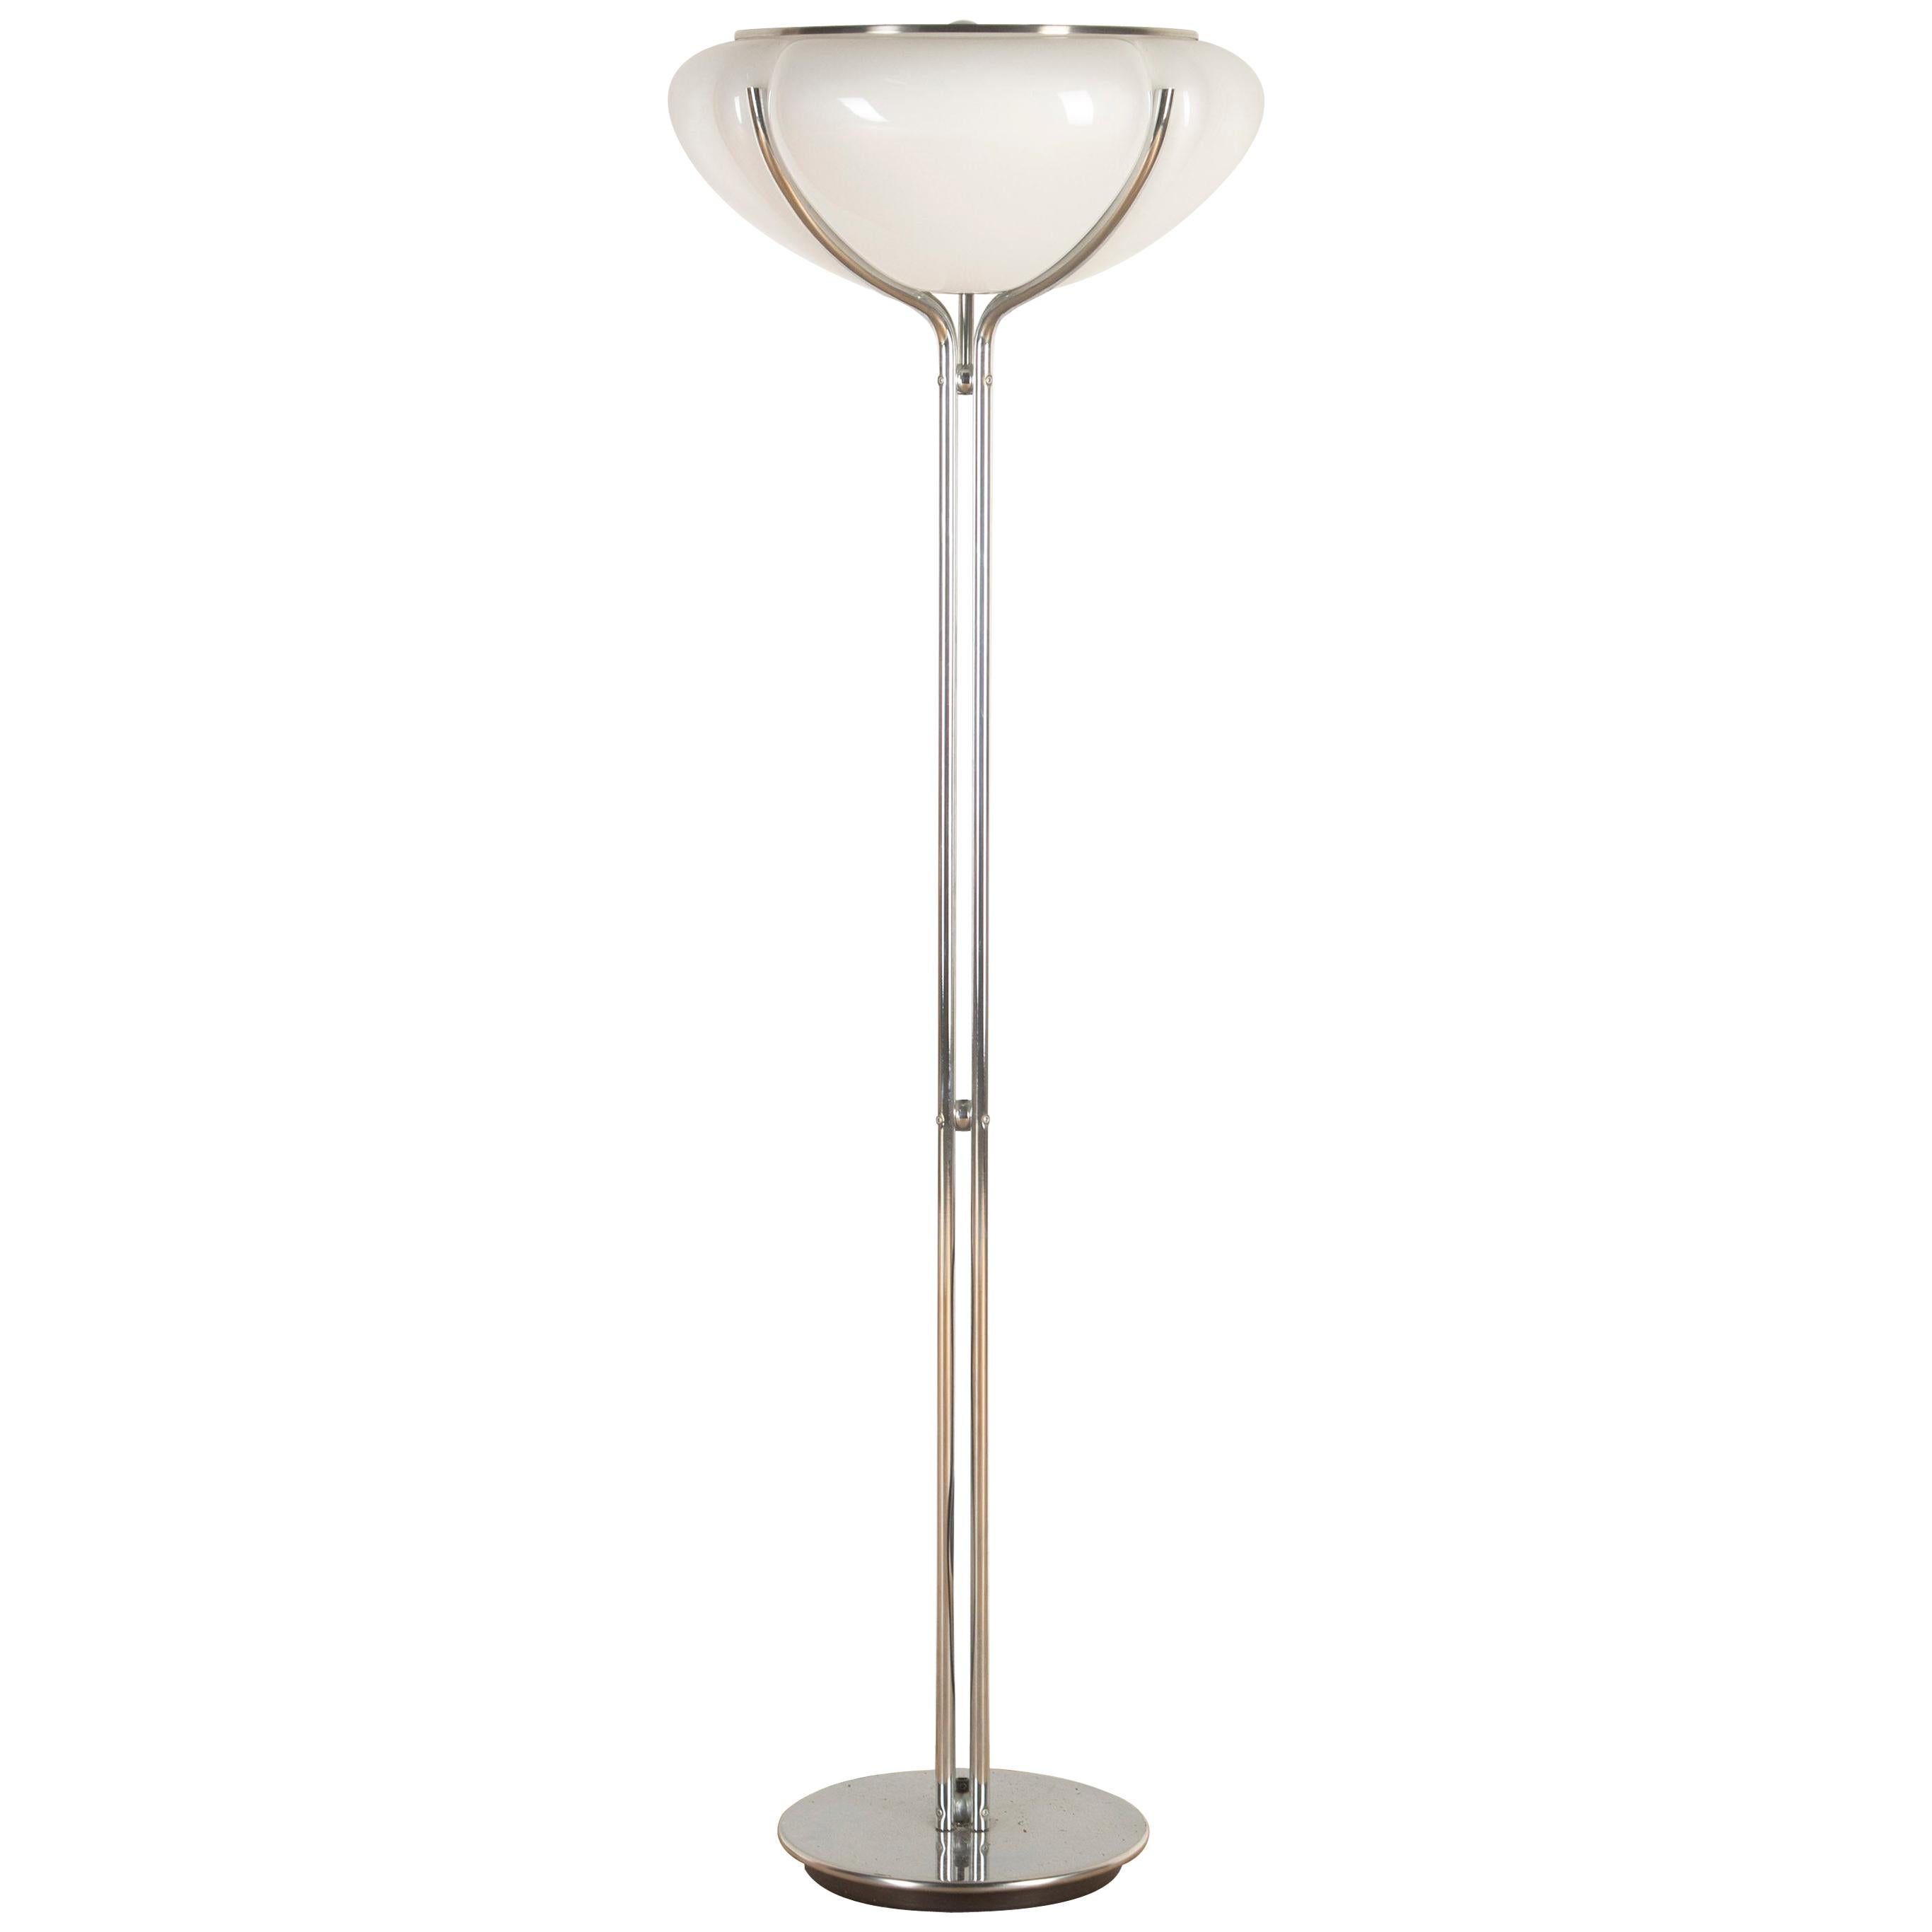 1970s Italian Design Standard Lamp For Sale